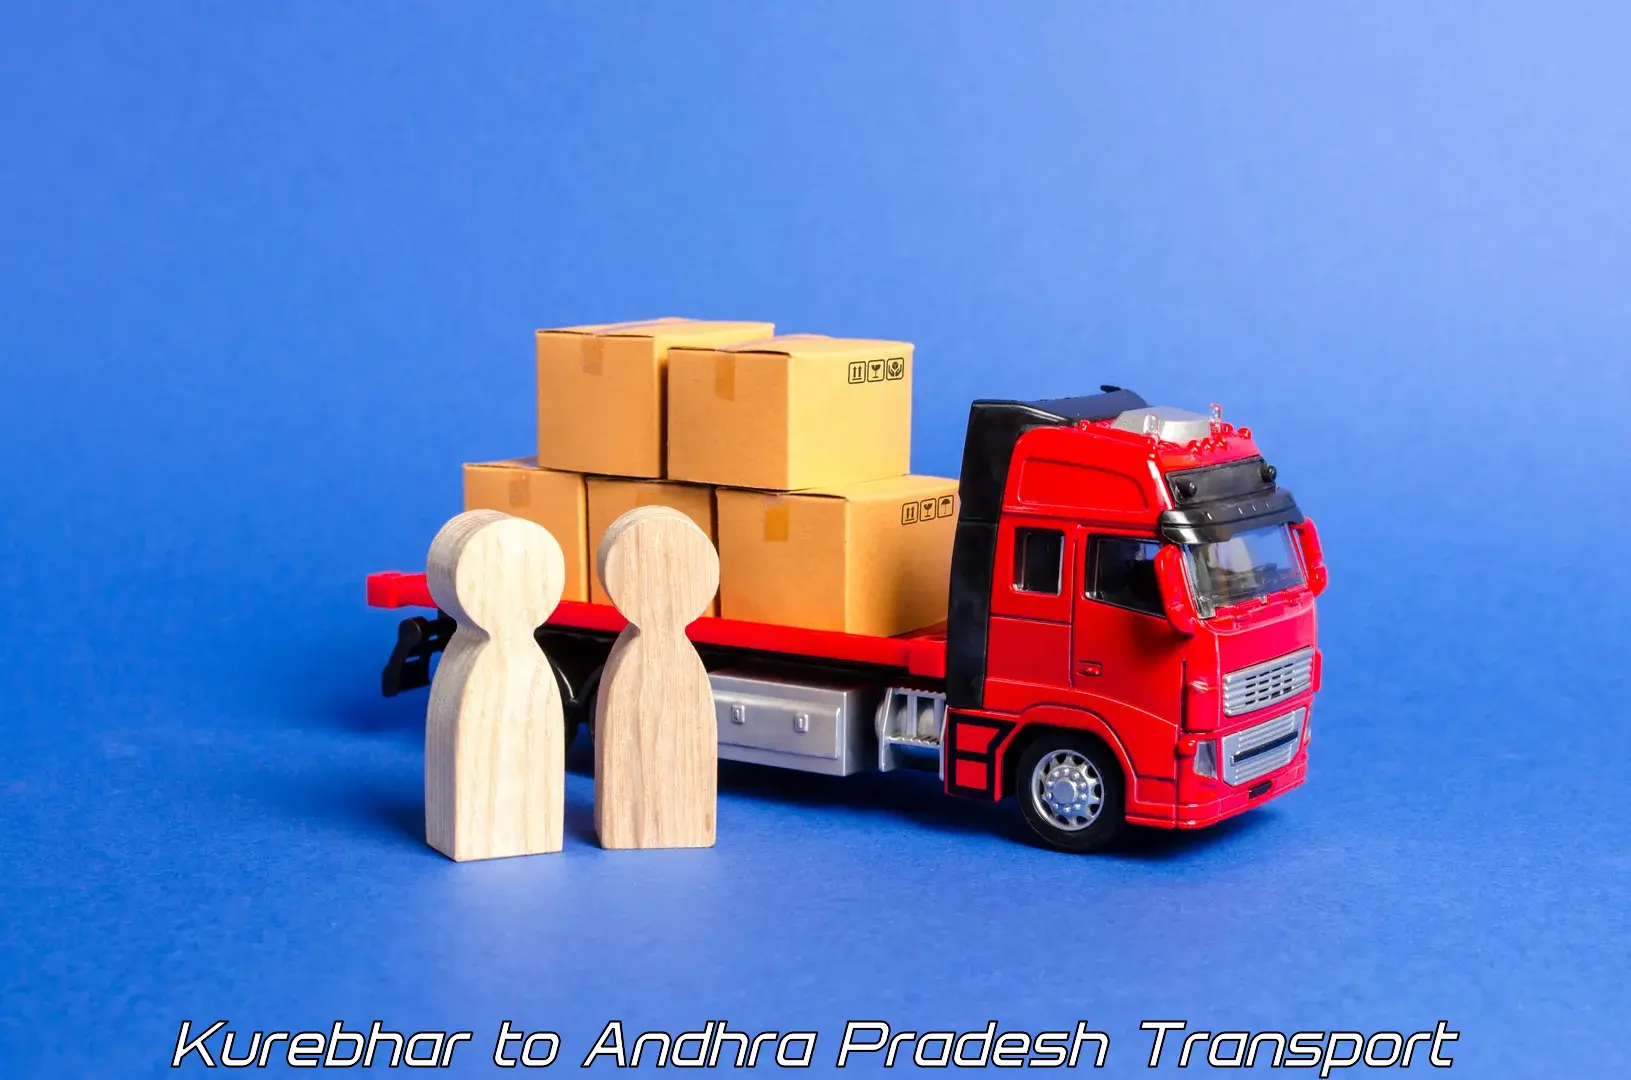 Lorry transport service Kurebhar to Naupada